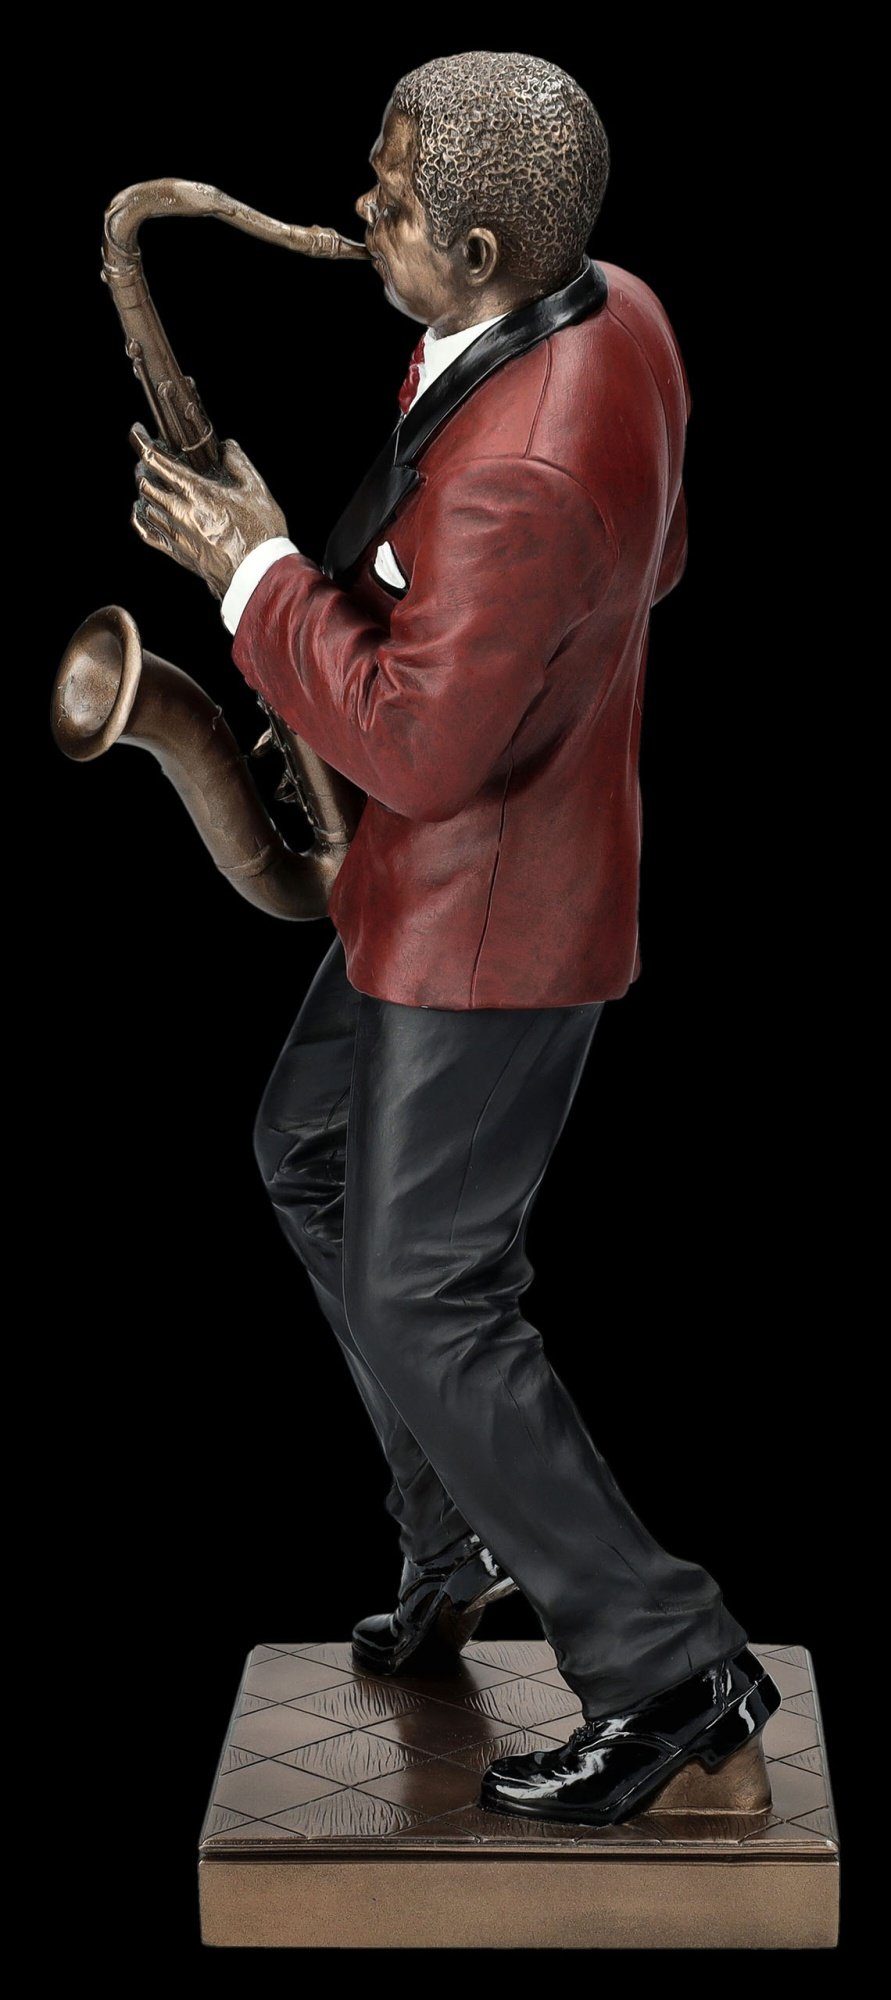 Musiker Saxophonist Figur Dekoration GmbH - Jazz Band Dekofigur rot Dekofigur Shop - The Figuren